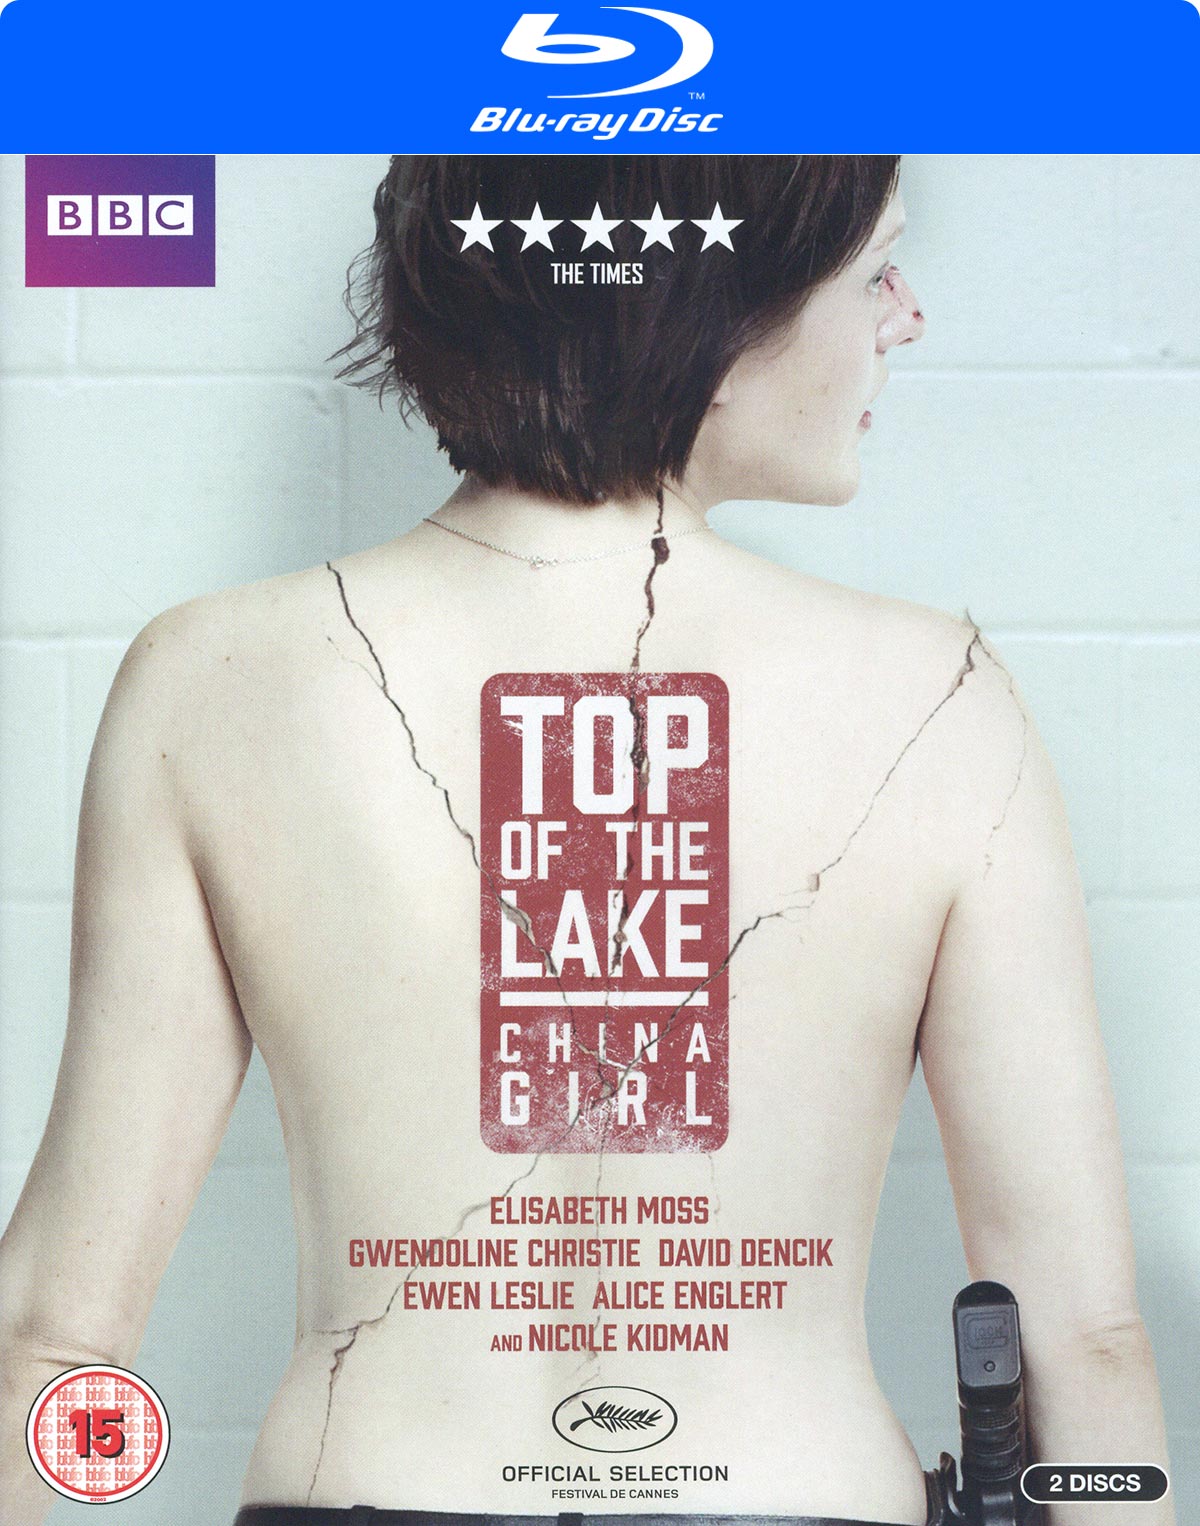 Top of the lake - China girl (Ej svensk text)